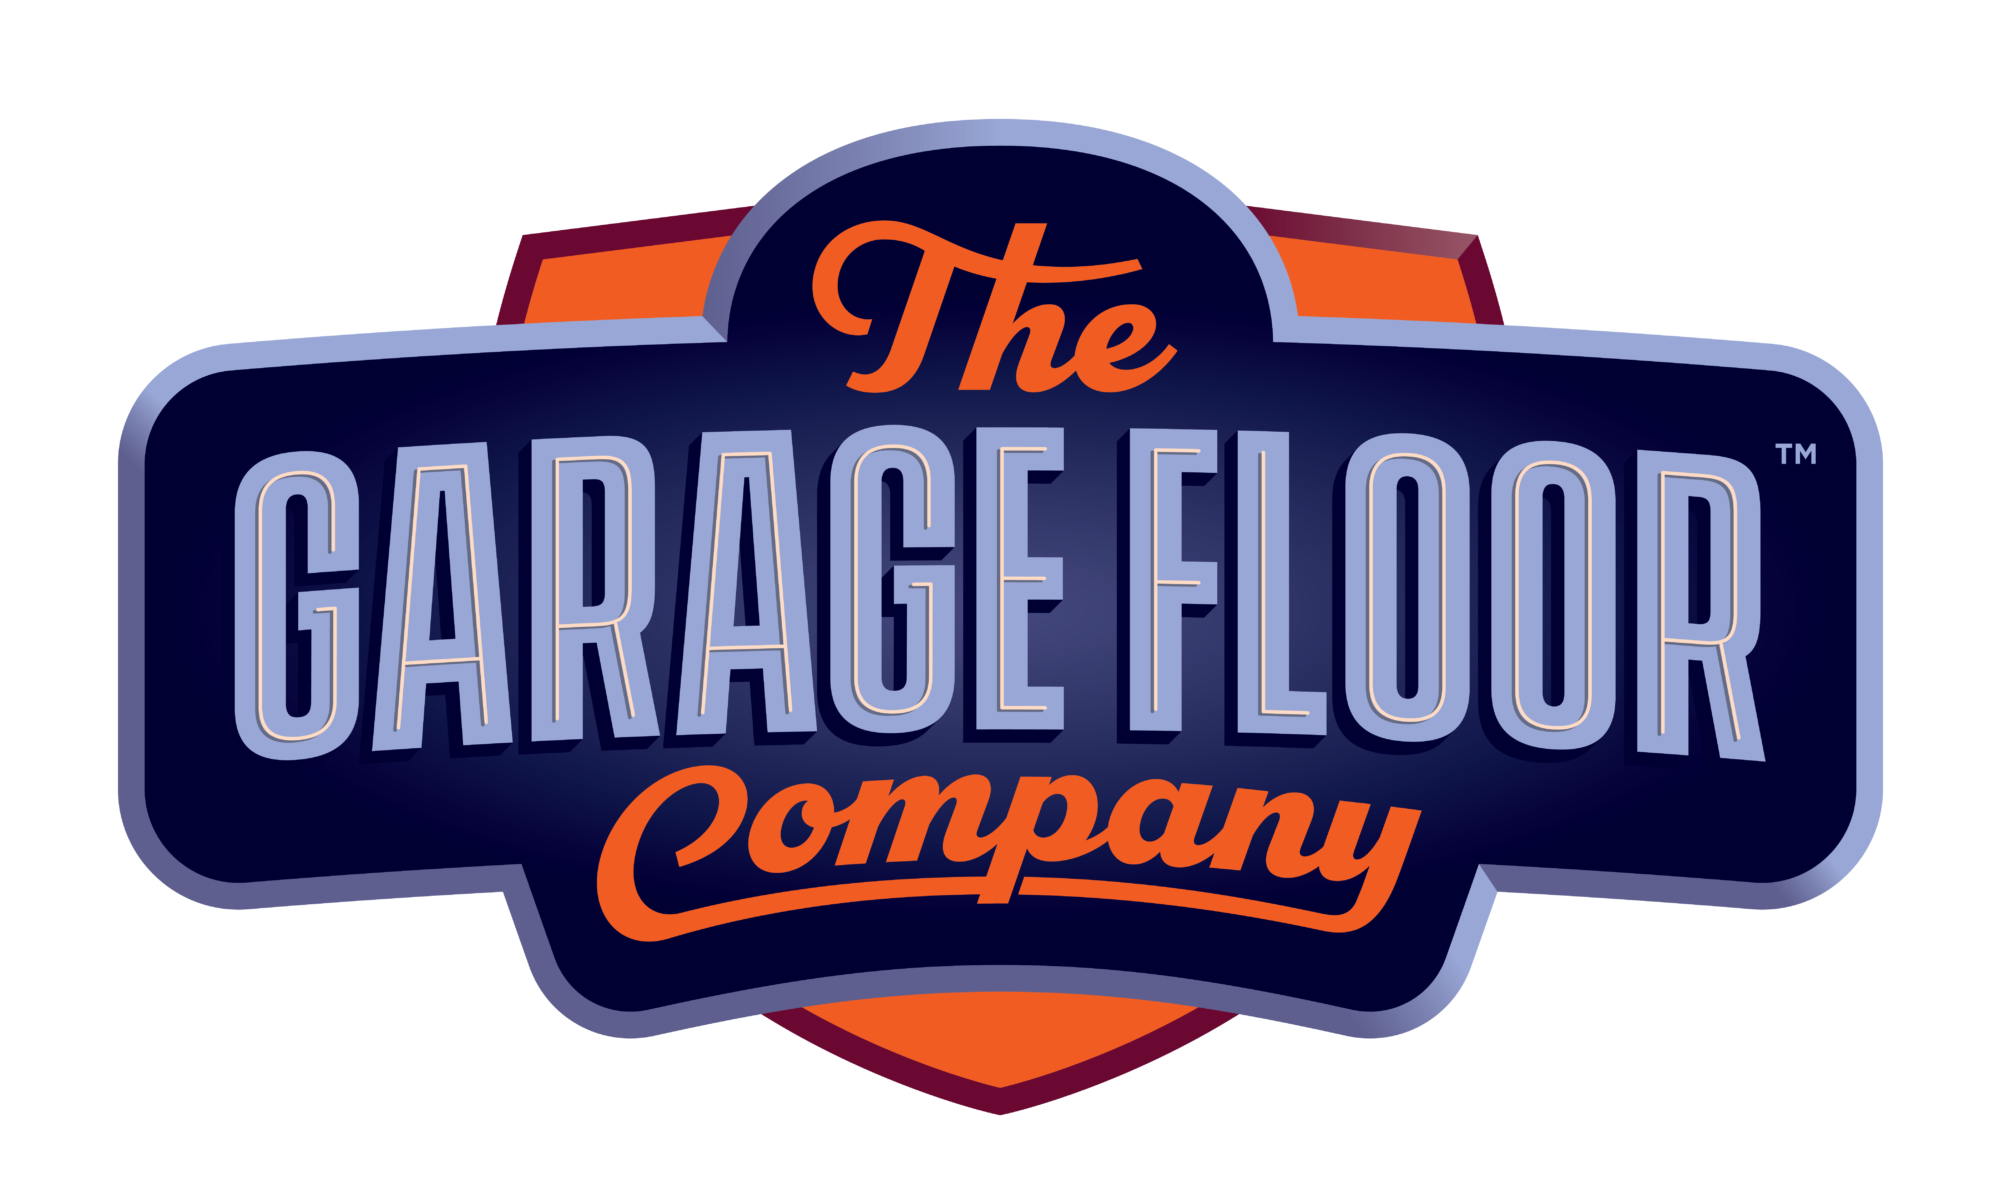 The Garage Floor Company logo